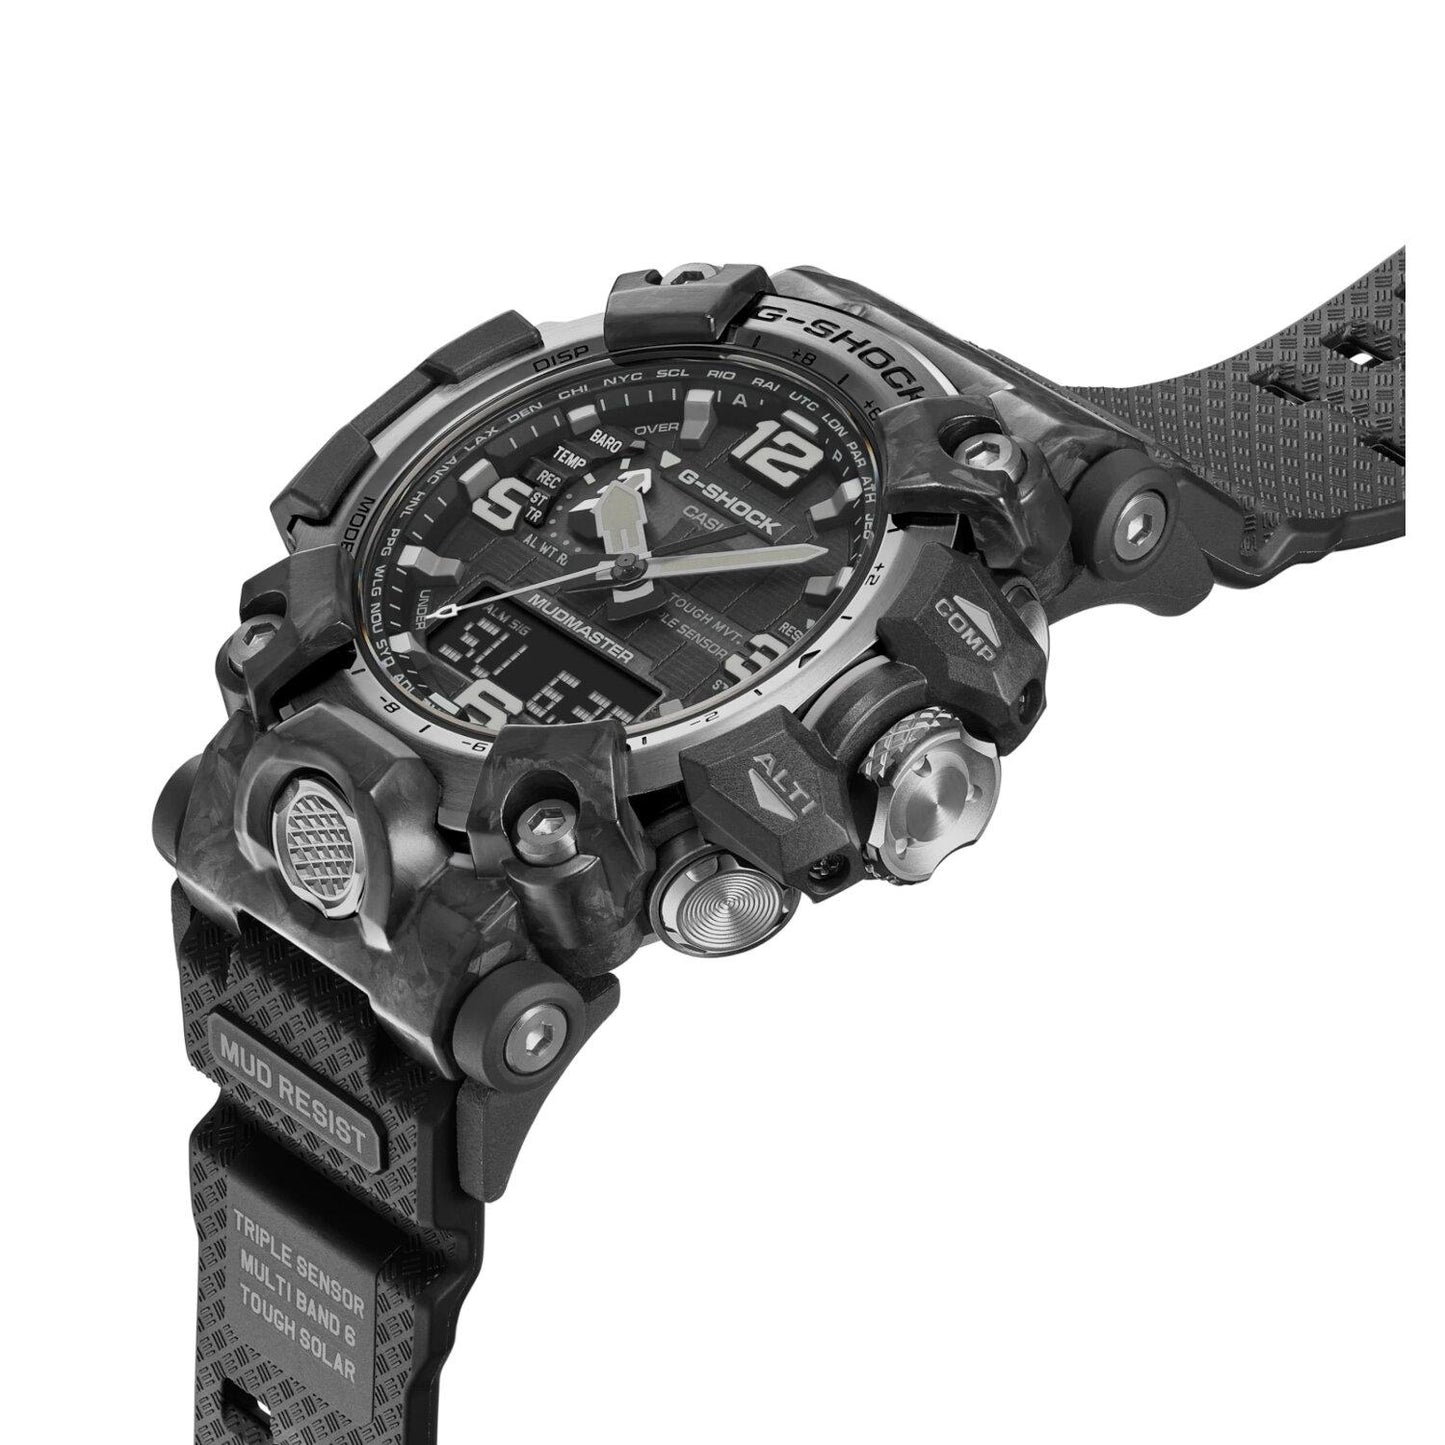 Reloj G-SHOCK GWG-2000-1A1CR Mud Master-Negro